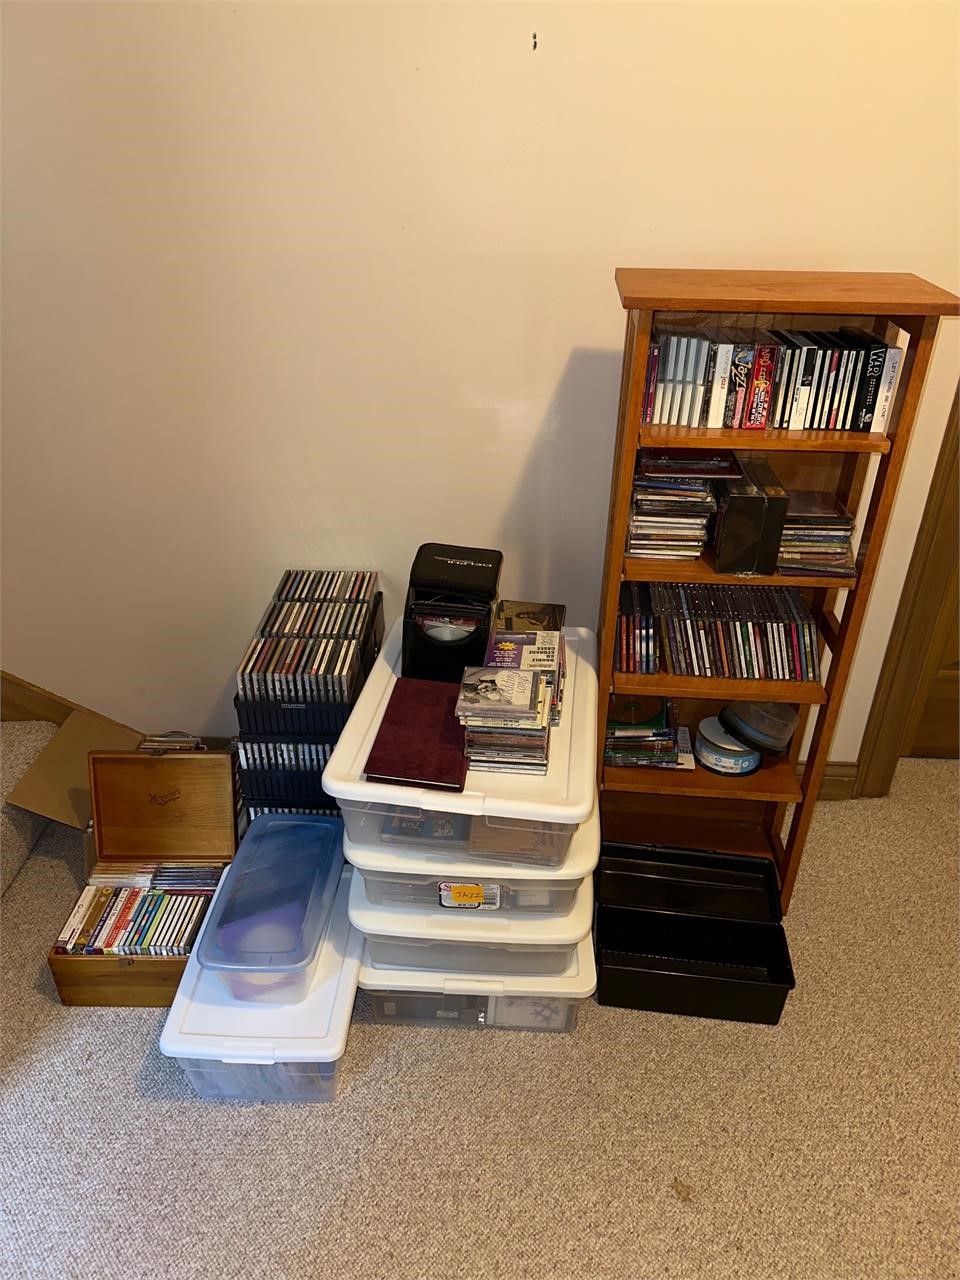 CD’s, totes & shelf